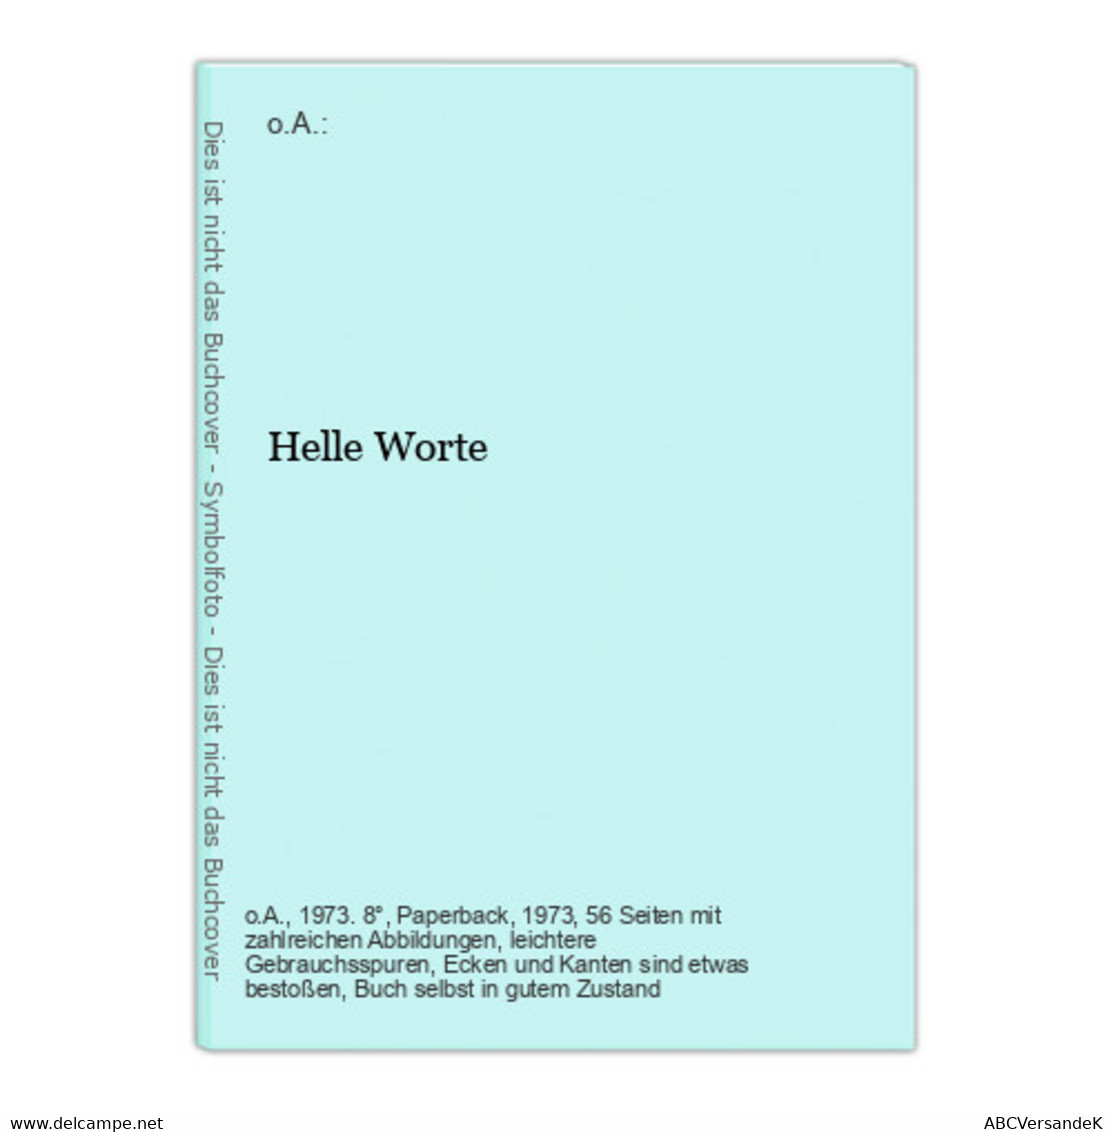 Helle Worte - German Authors